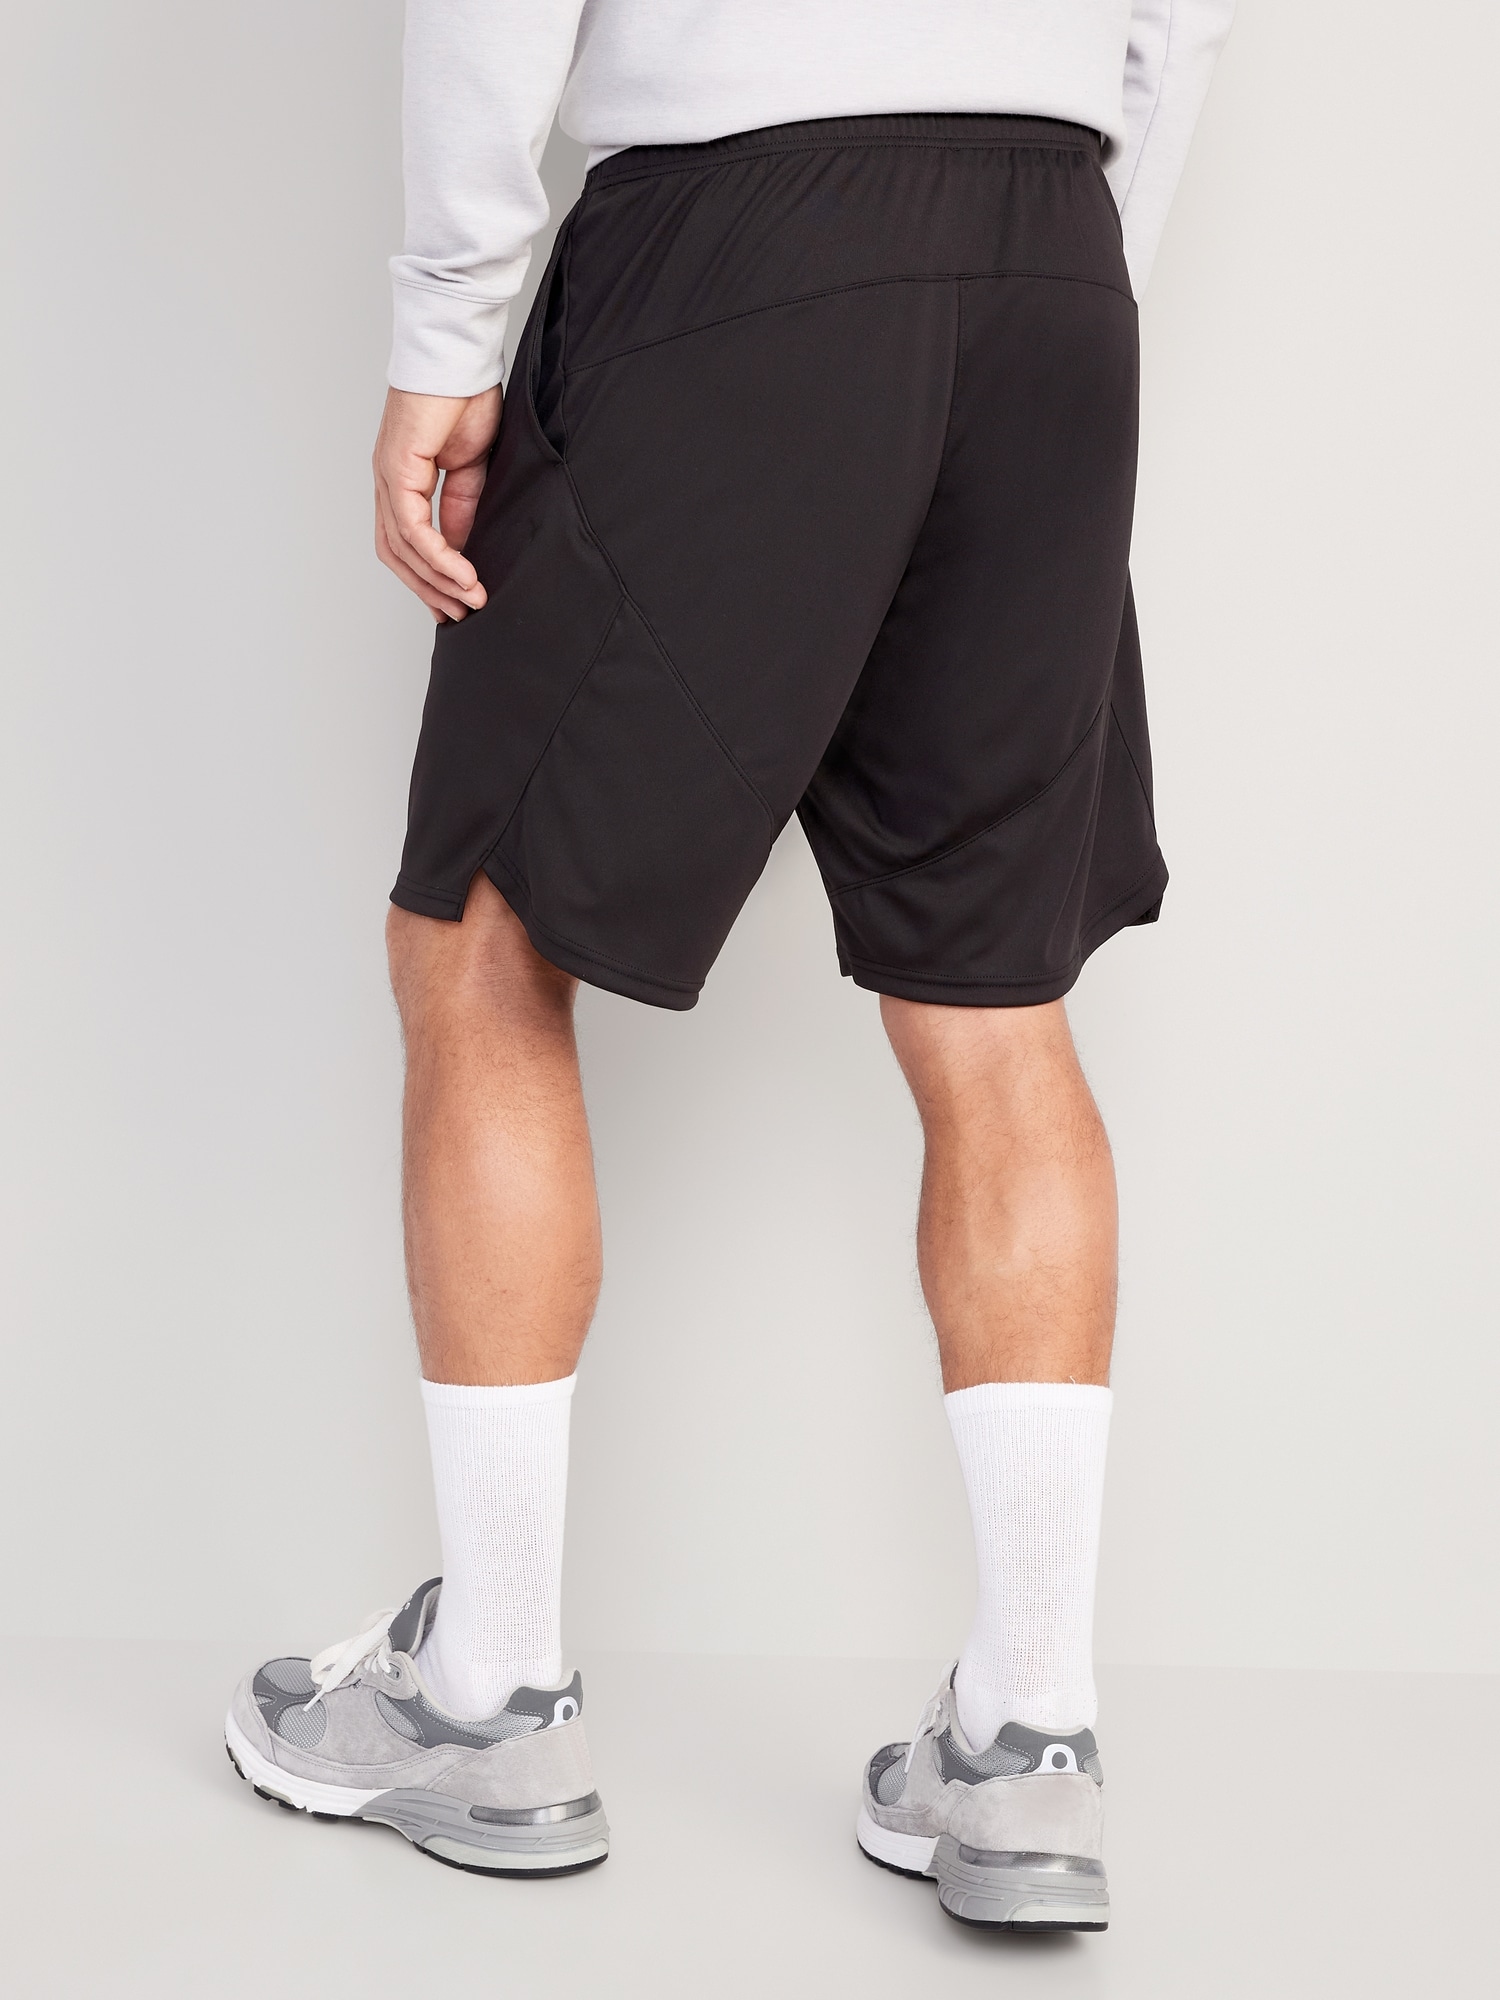 4013 Sports Mesh Fabric  Jersey & Athletic Shorts Mesh